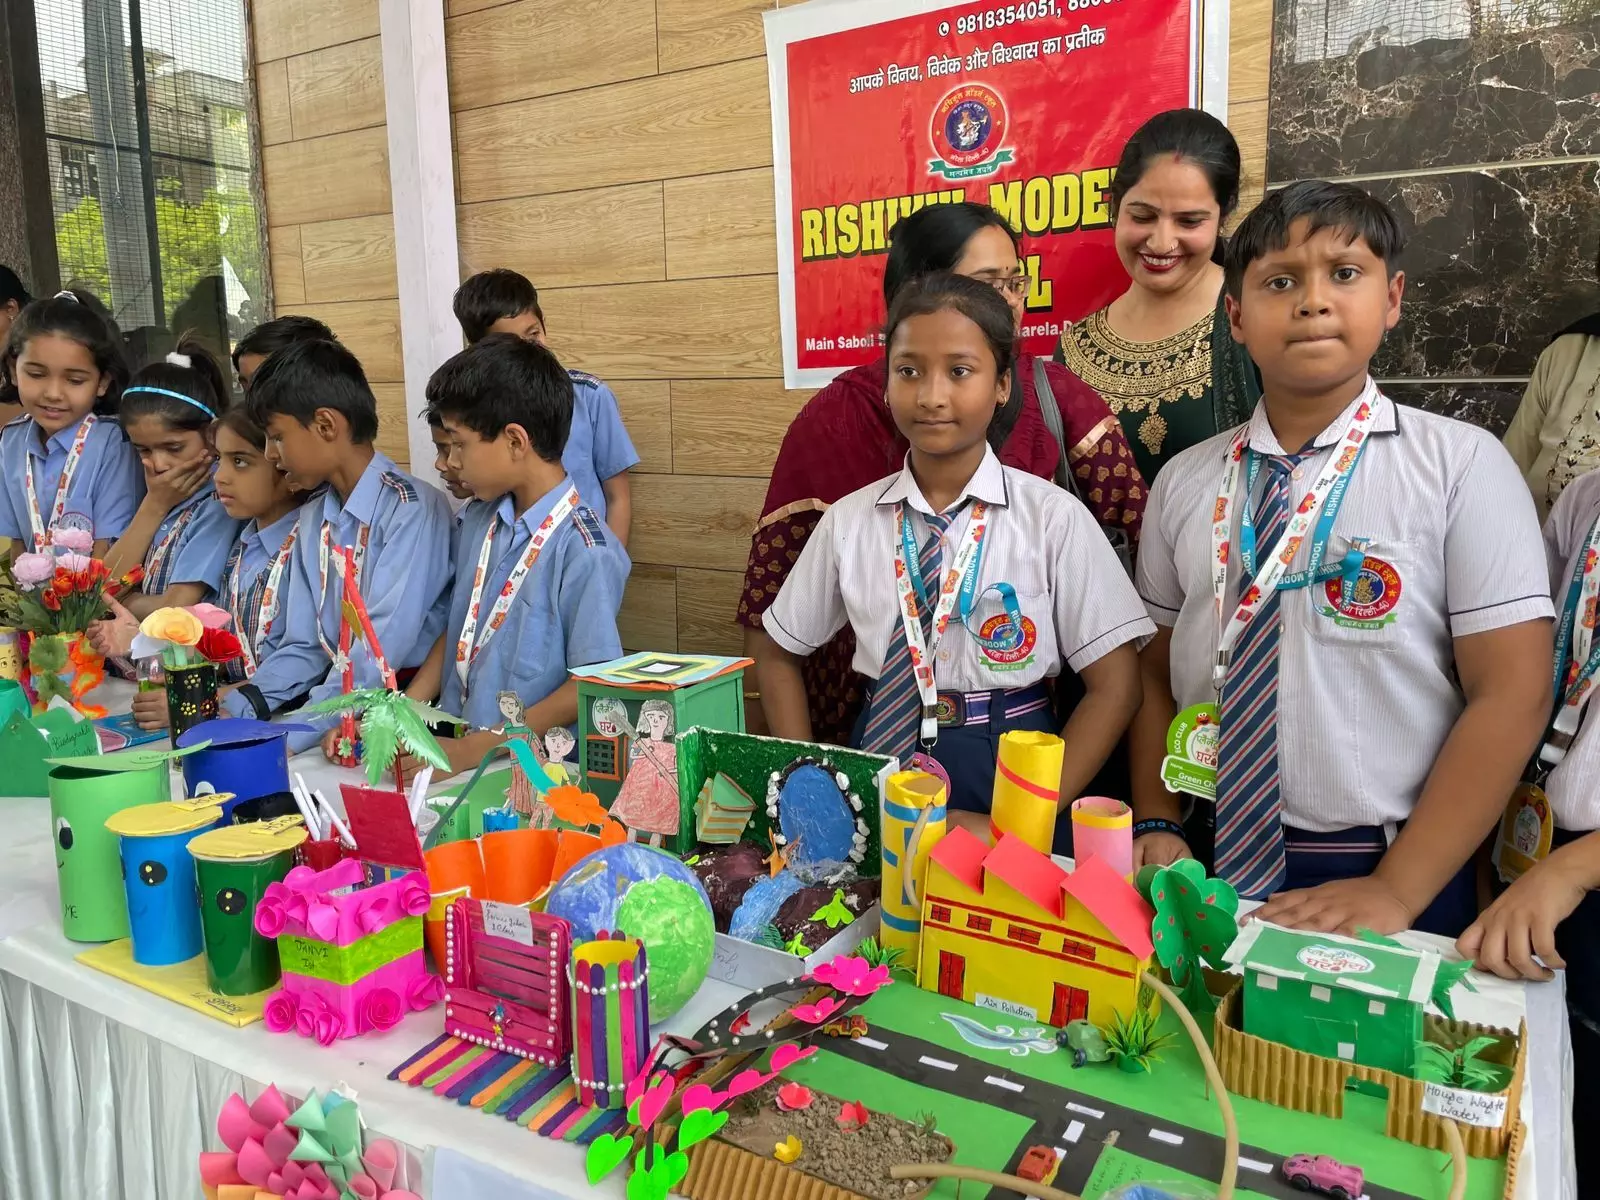 Sesame Workshop India Promotes Environmental Education and Stewardship with Mera Planet, Mera Ghar Program